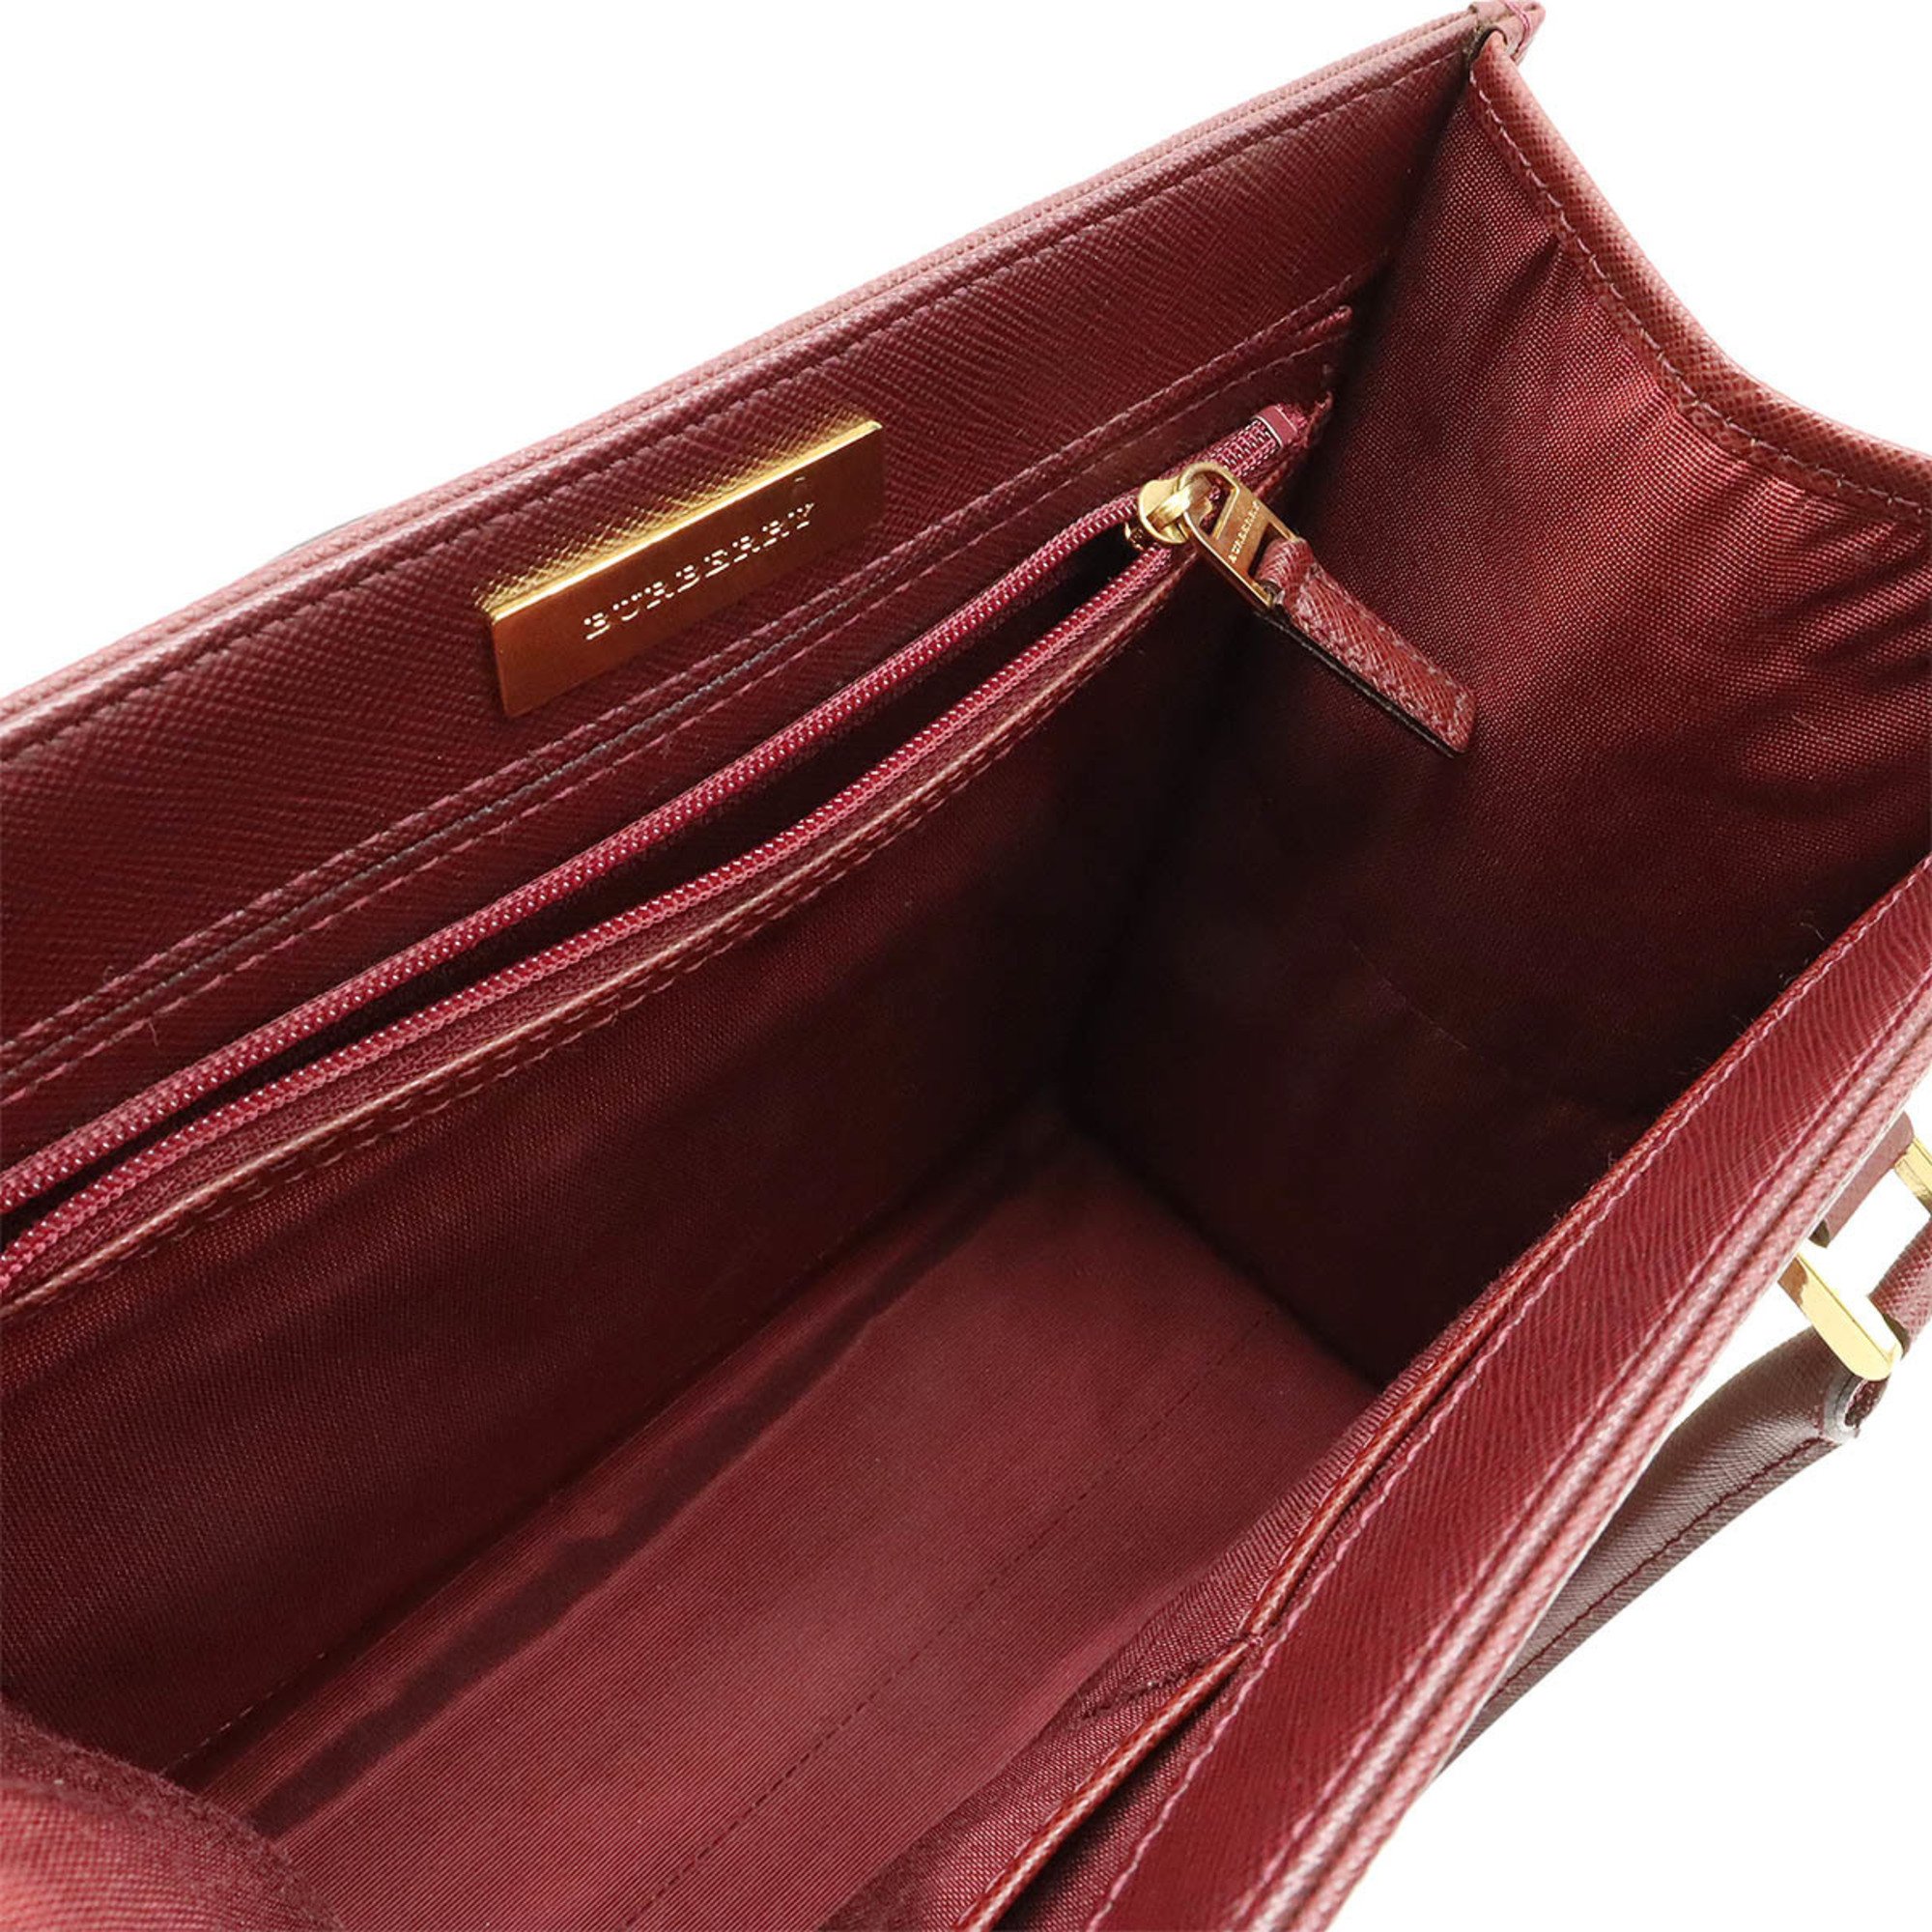 BURBERRY Nova Check Pattern Handbag Canvas Leather Beige Bordeaux Black